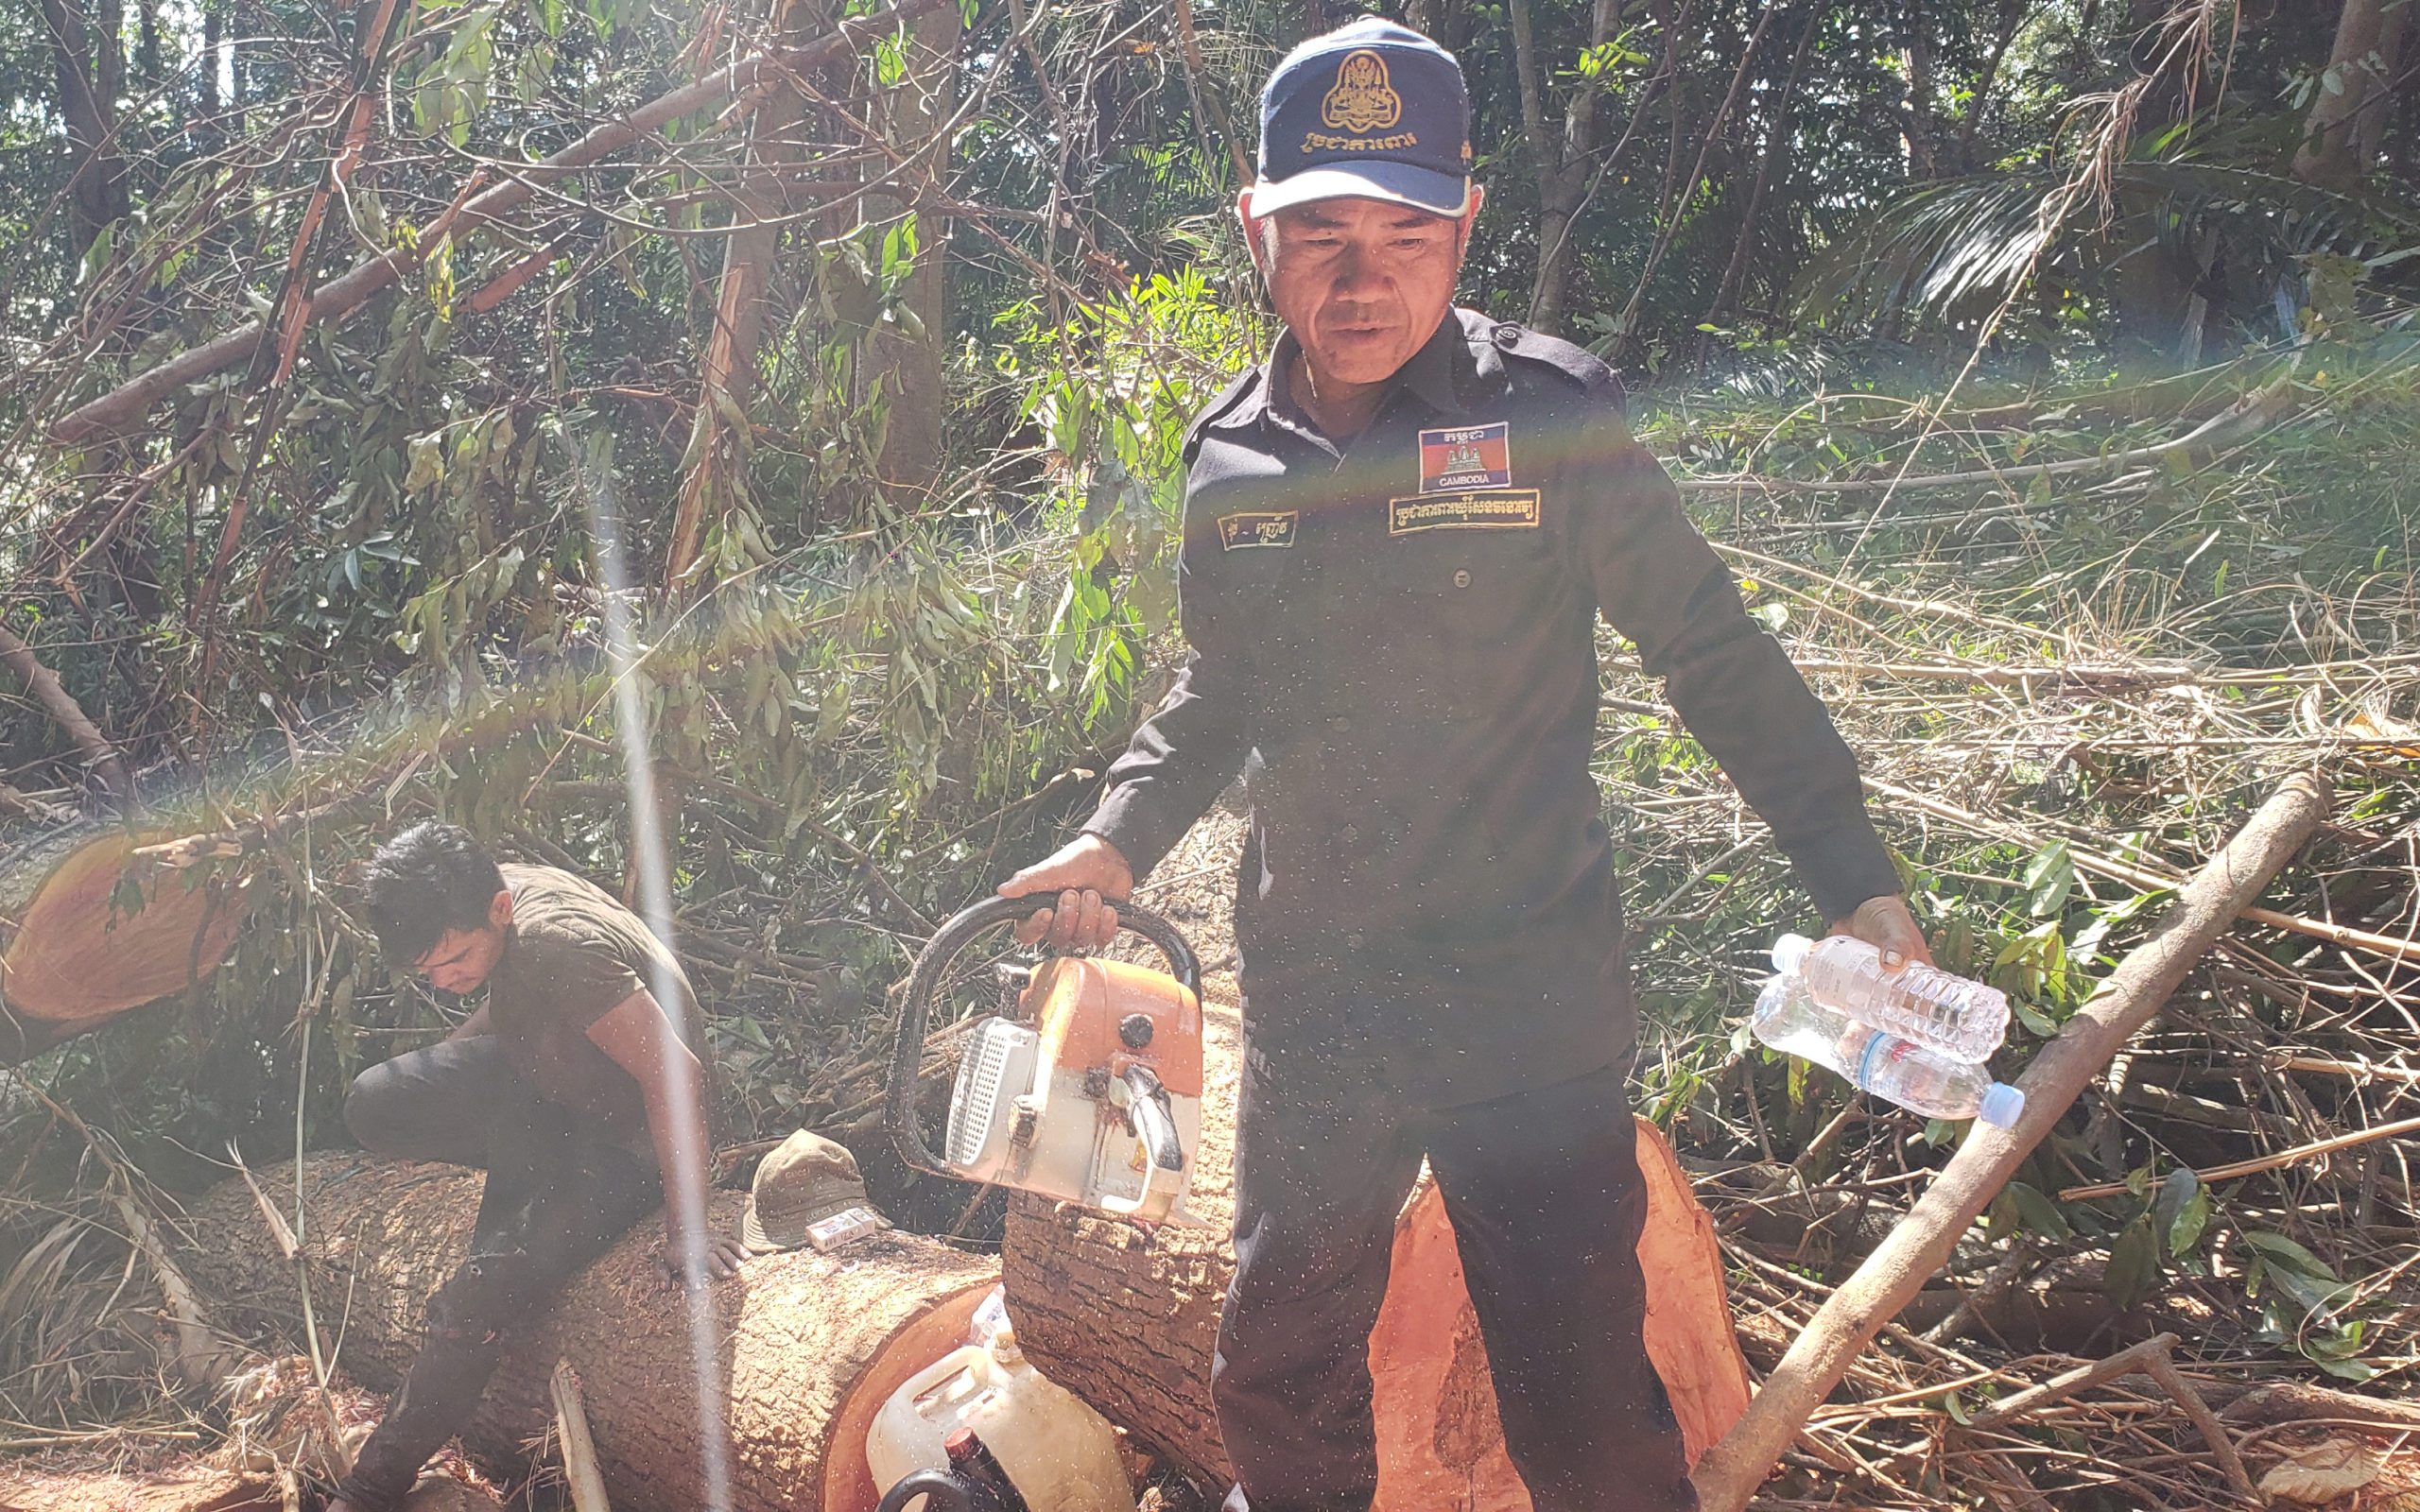 Phsal Nhoeur, 45, an Andoung Kraloeng community patroller, carries a chainsaw away from a man caught cutting a tree in Mondulkiri's Keo Seima Wildlife Sanctuary on February 11, 2021. (Danielle Keeton-Olsen/VOD)